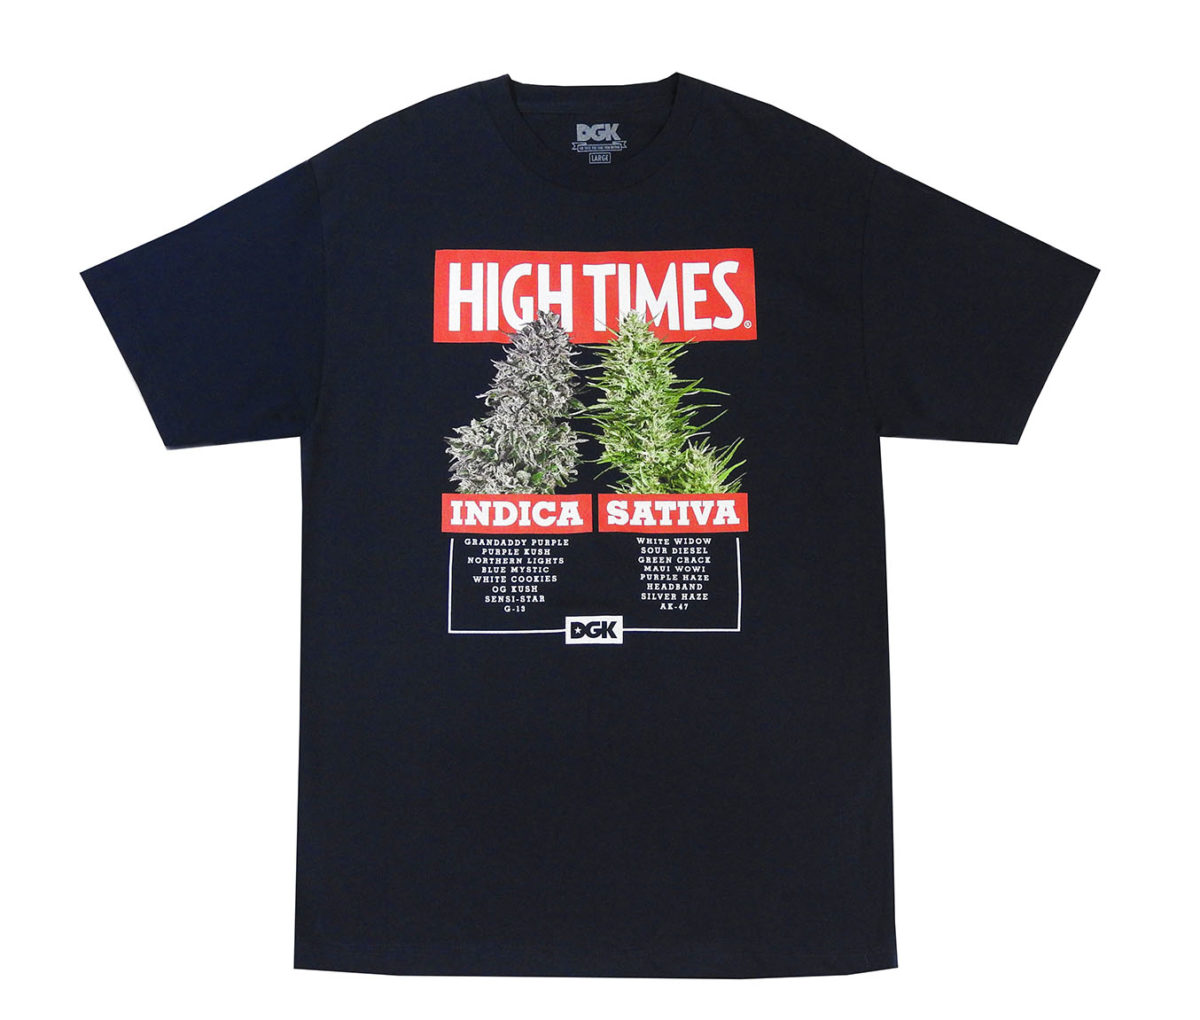 DGK Camiseta Hightimes Sat/ind